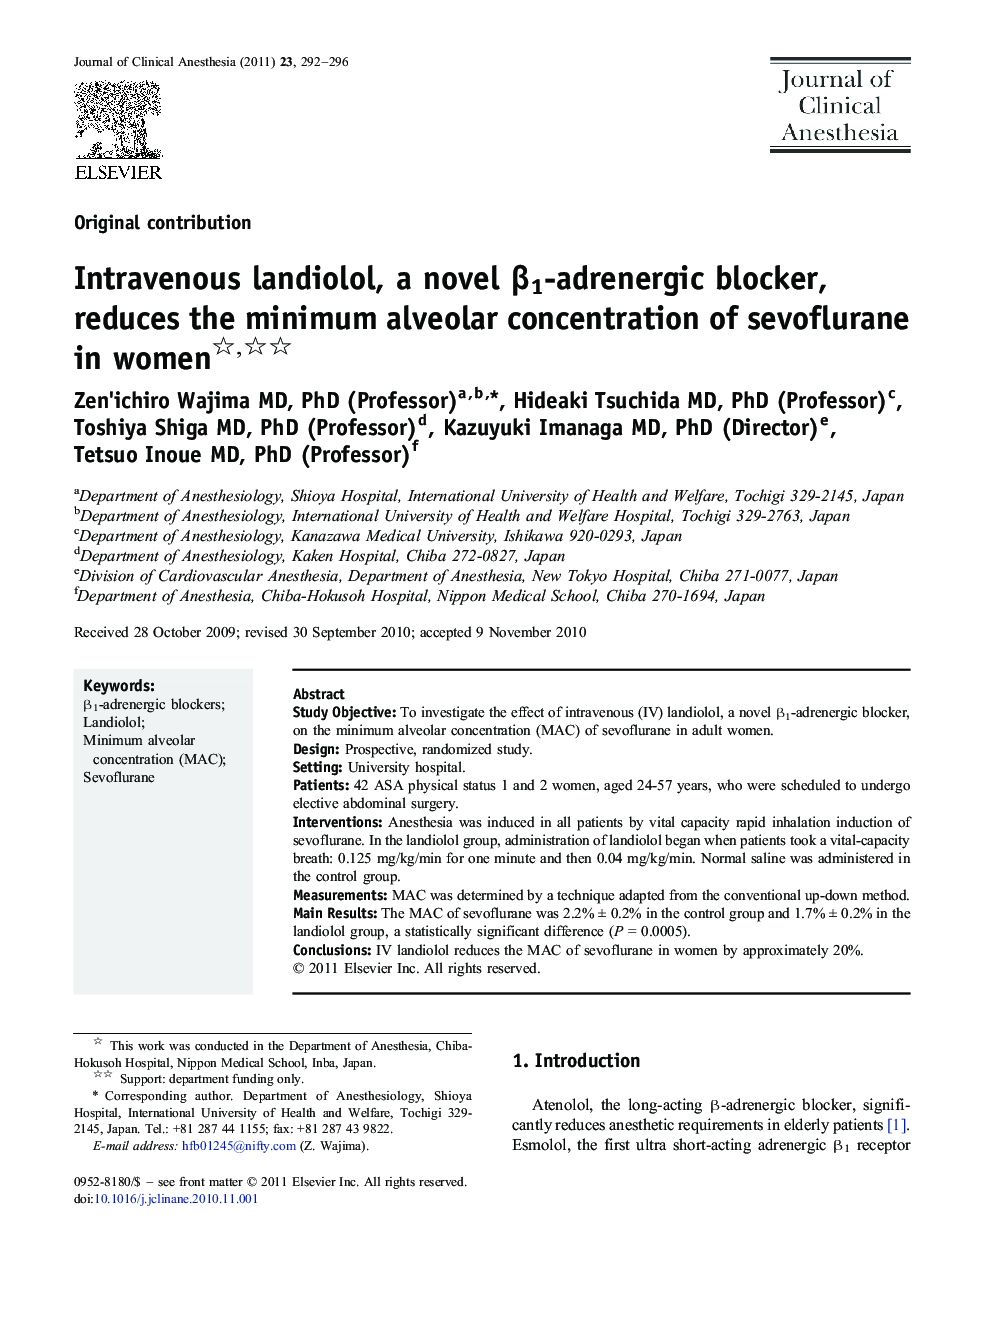 Intravenous landiolol, a novel β1-adrenergic blocker, reduces the minimum alveolar concentration of sevoflurane in women 